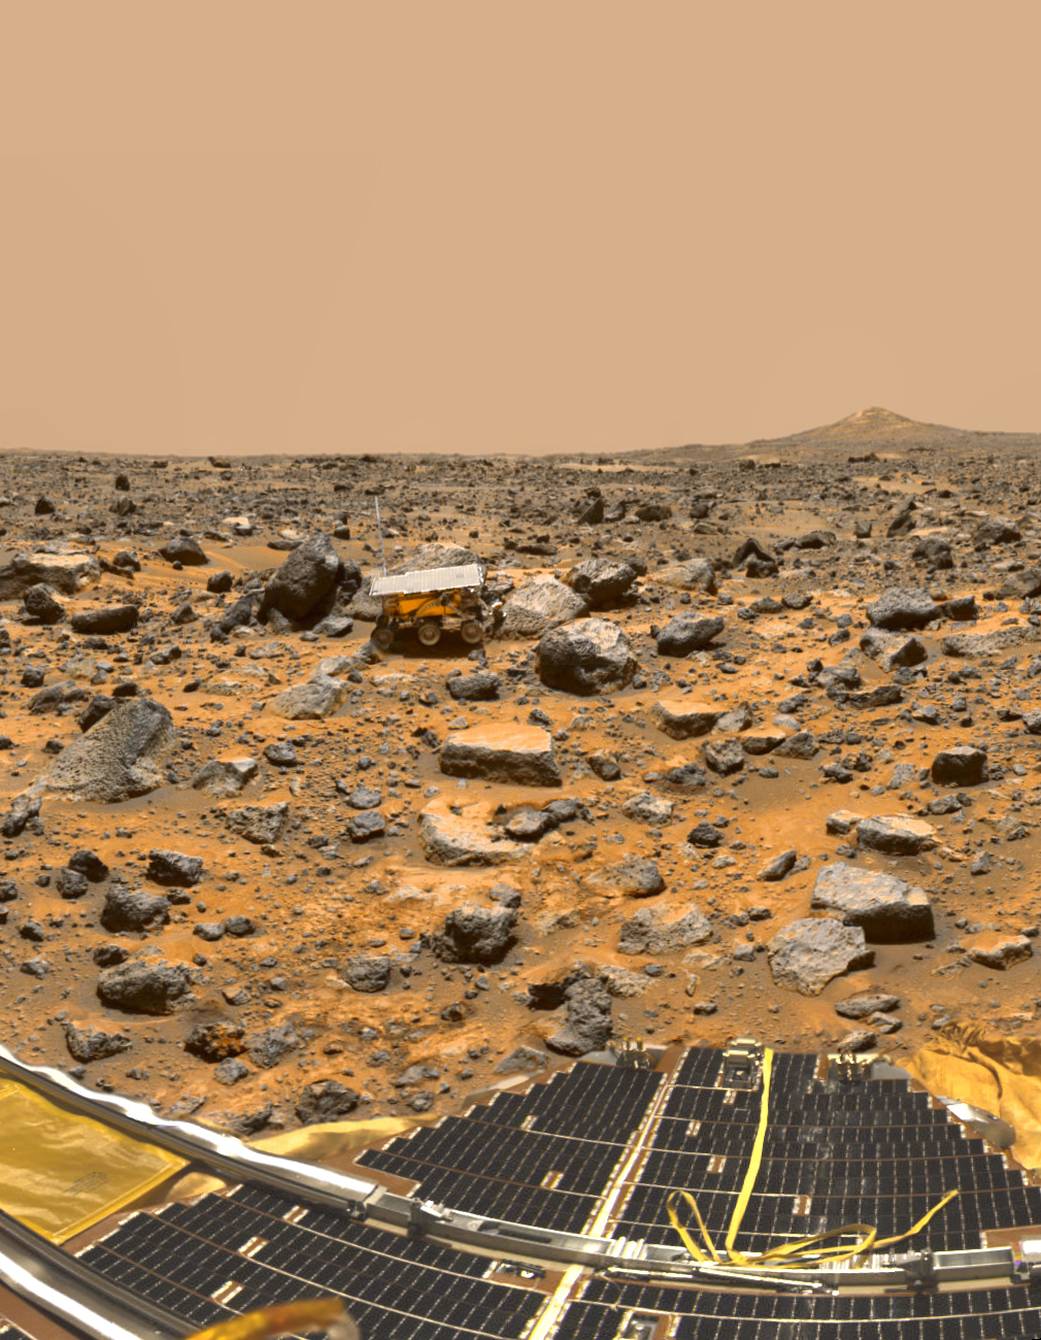 Mars Pathfinder and Spjourner rover